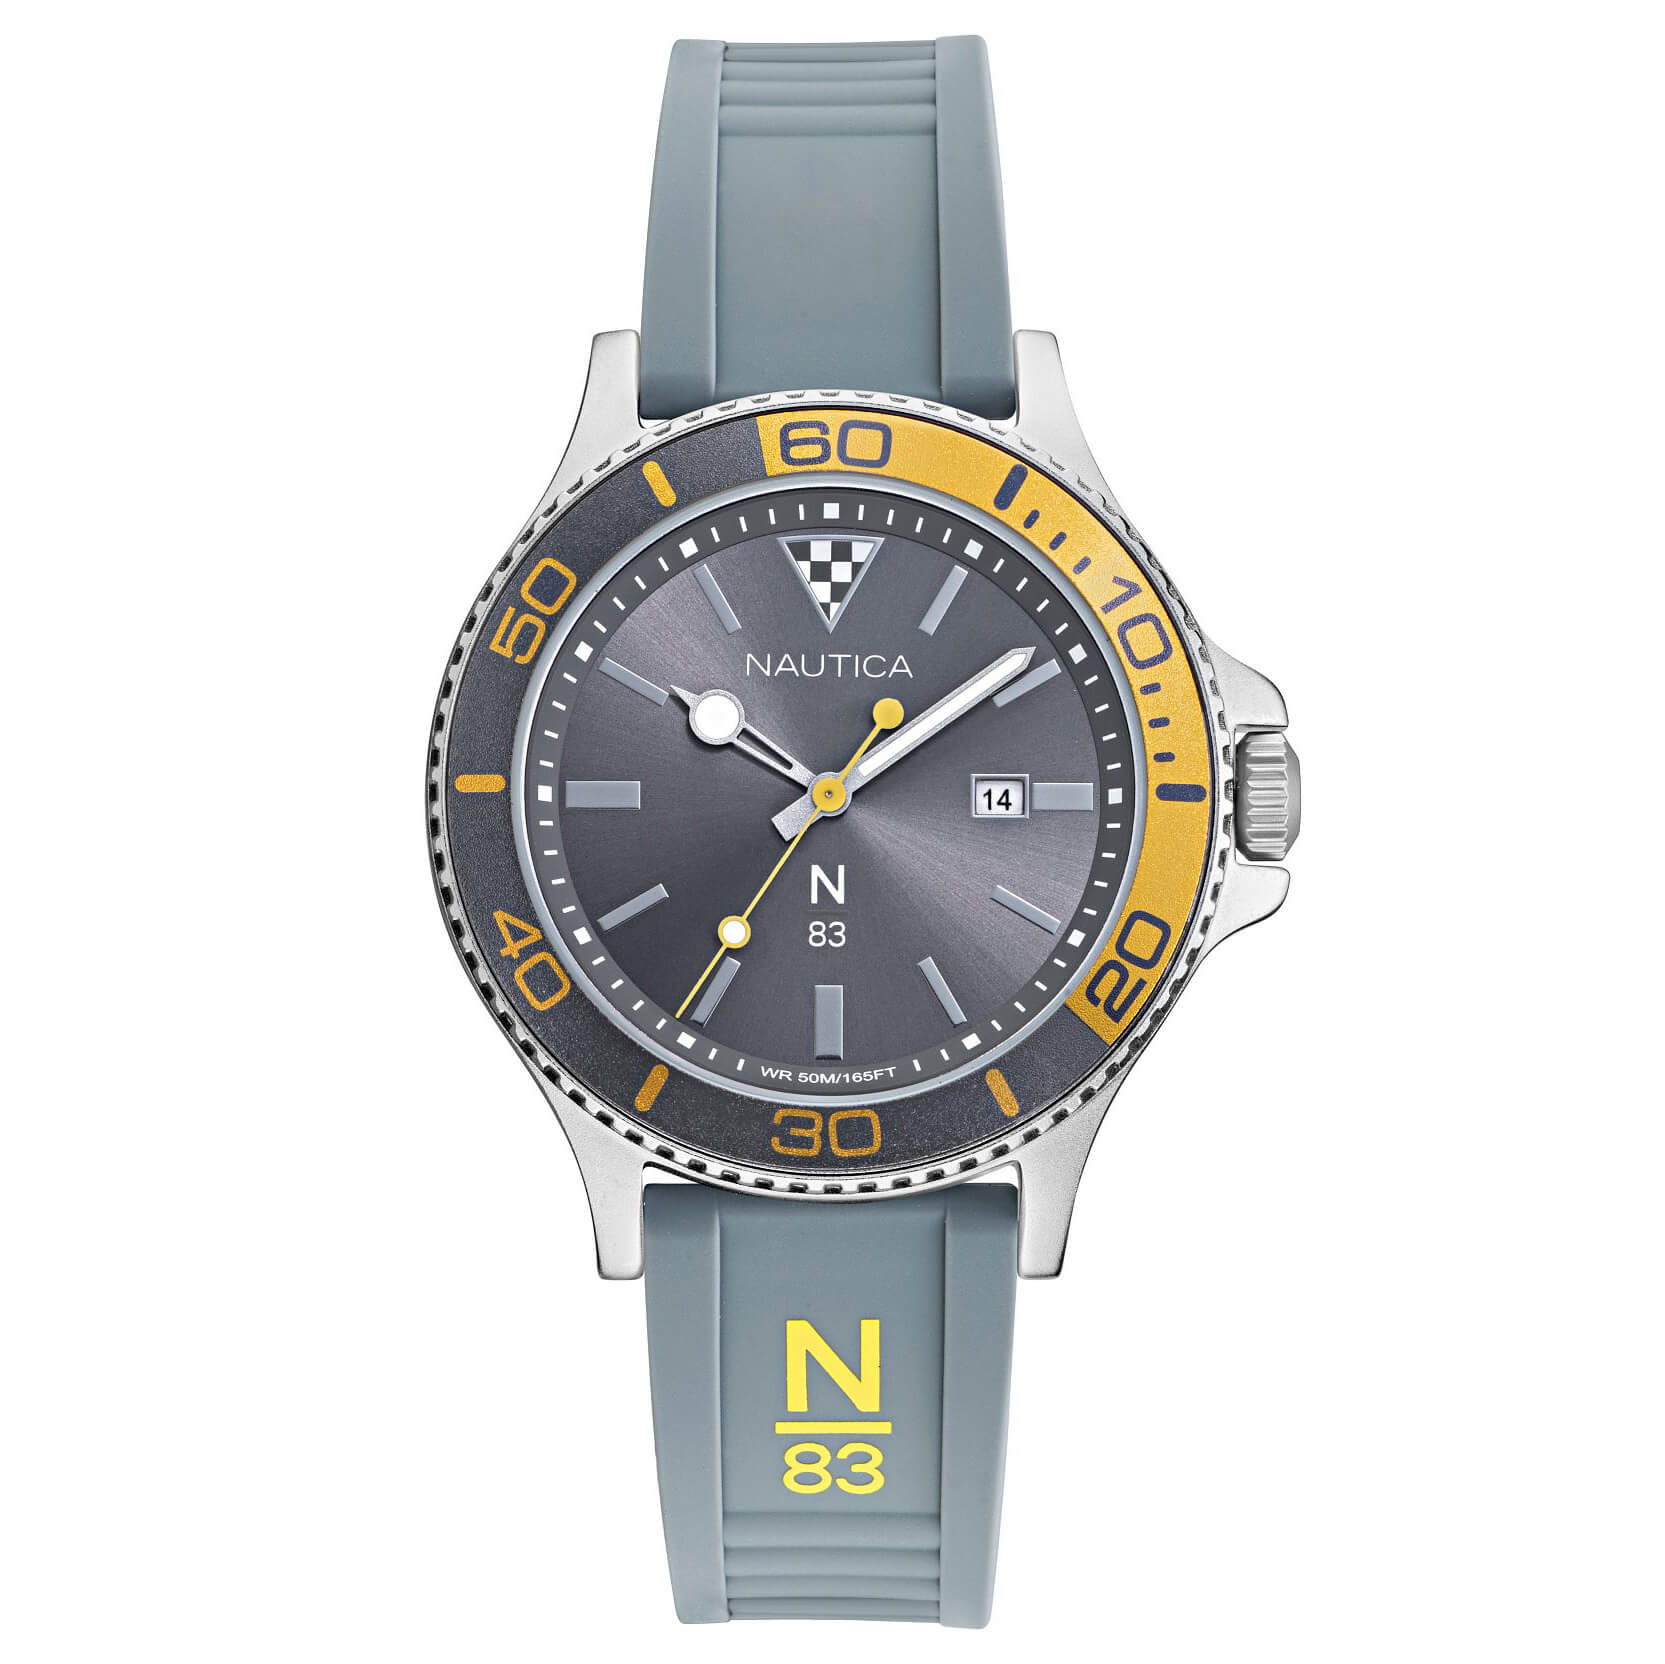 Nautica Men's Watch N-83 Accra Beach Grey Yellow NAPABS021 - Watches & Crystals